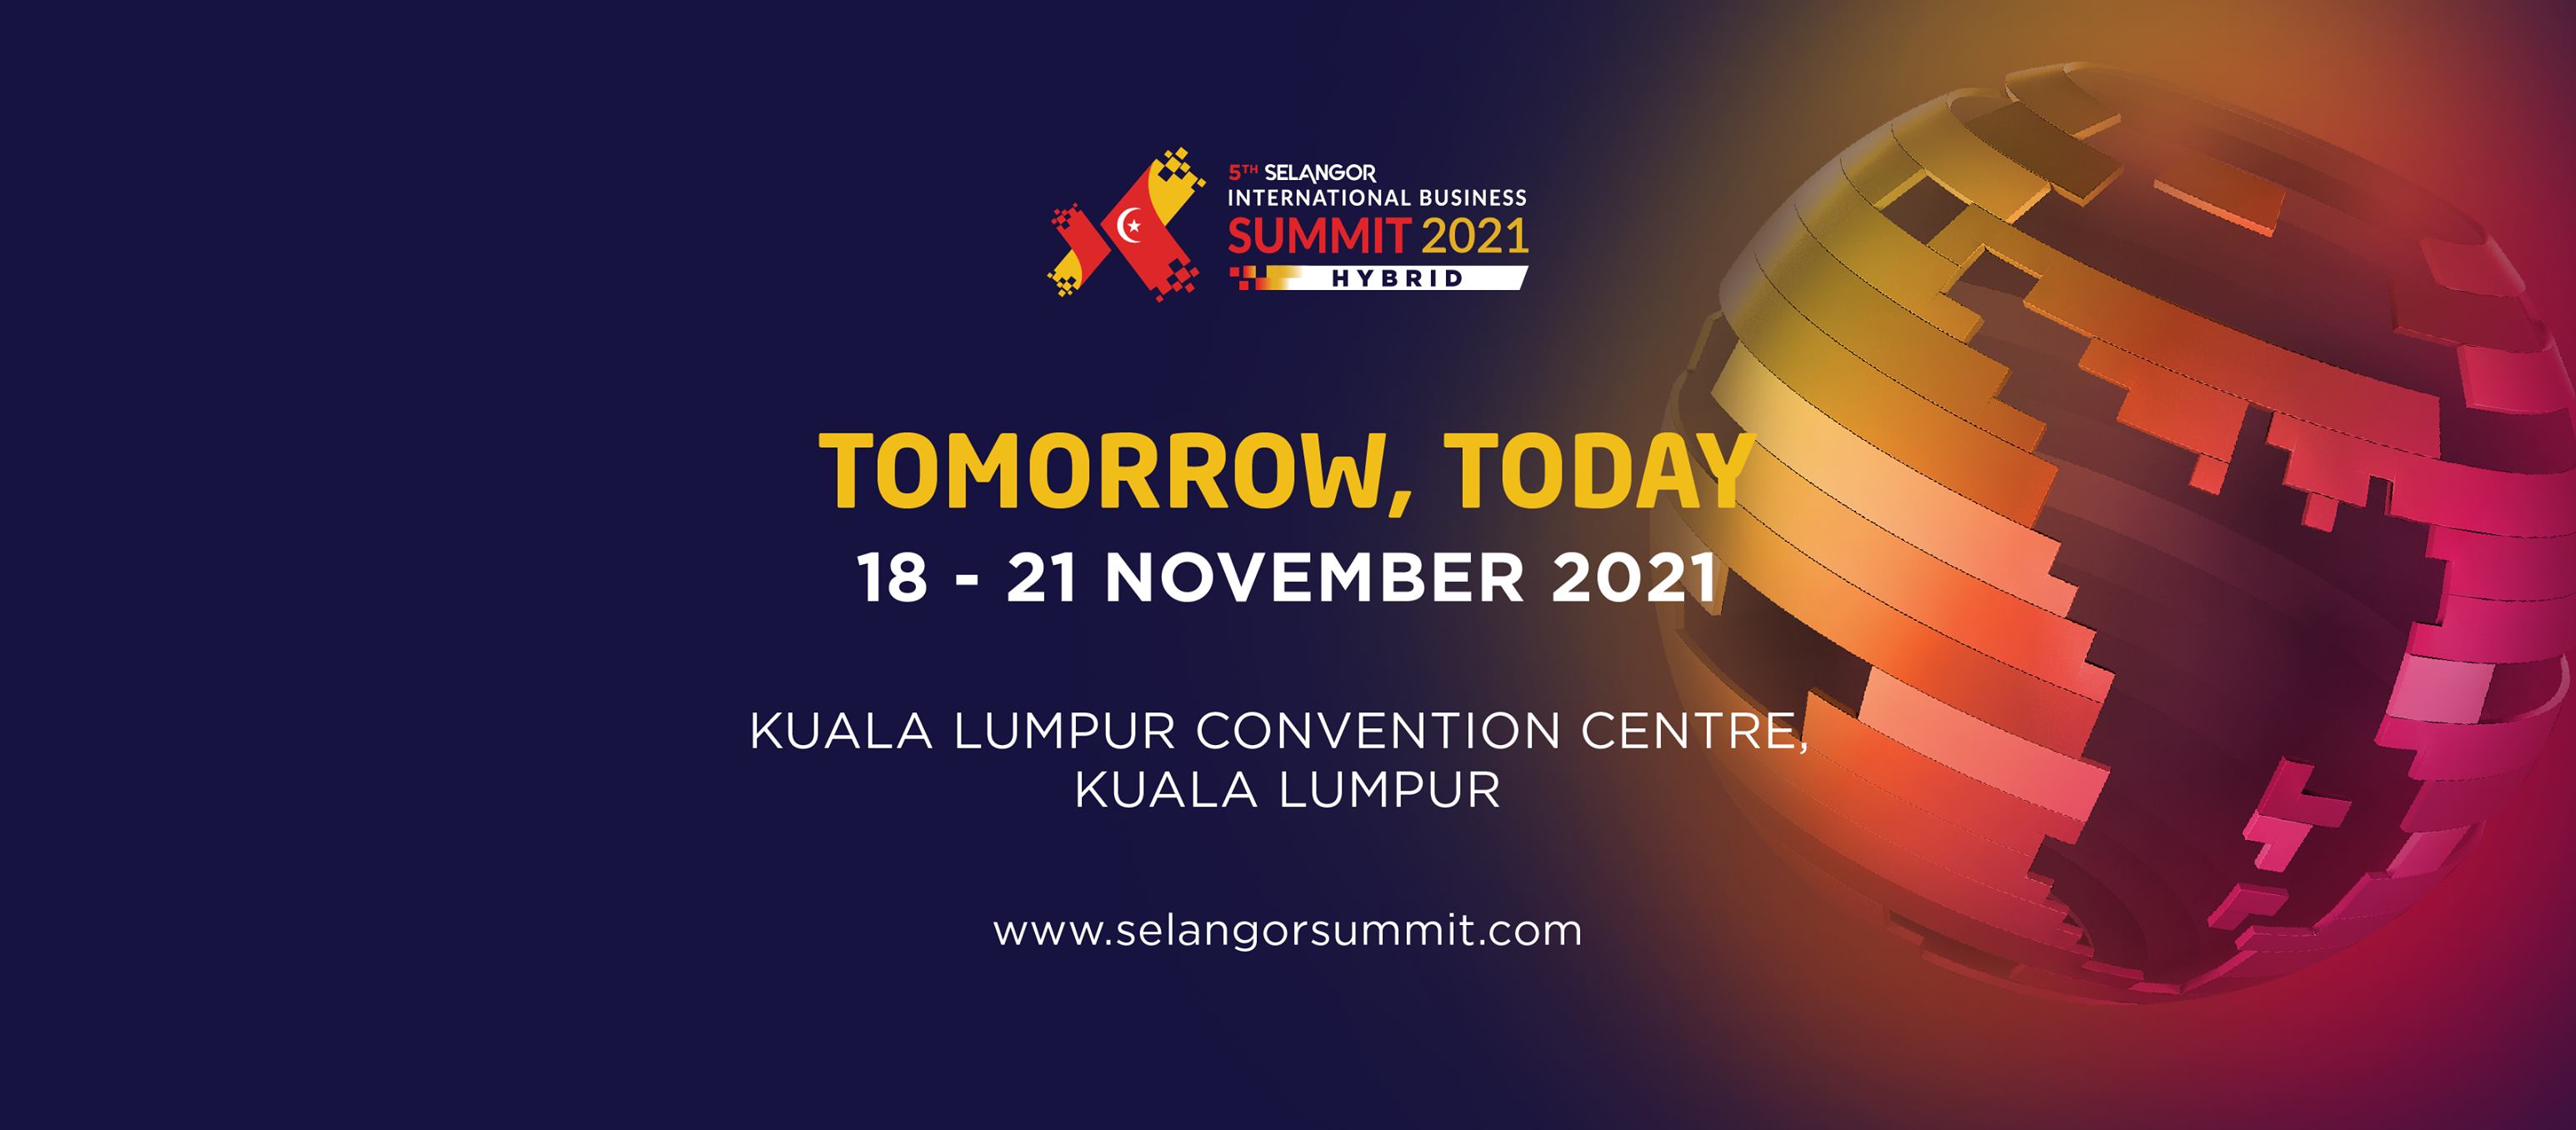 Selangor Summit 2021